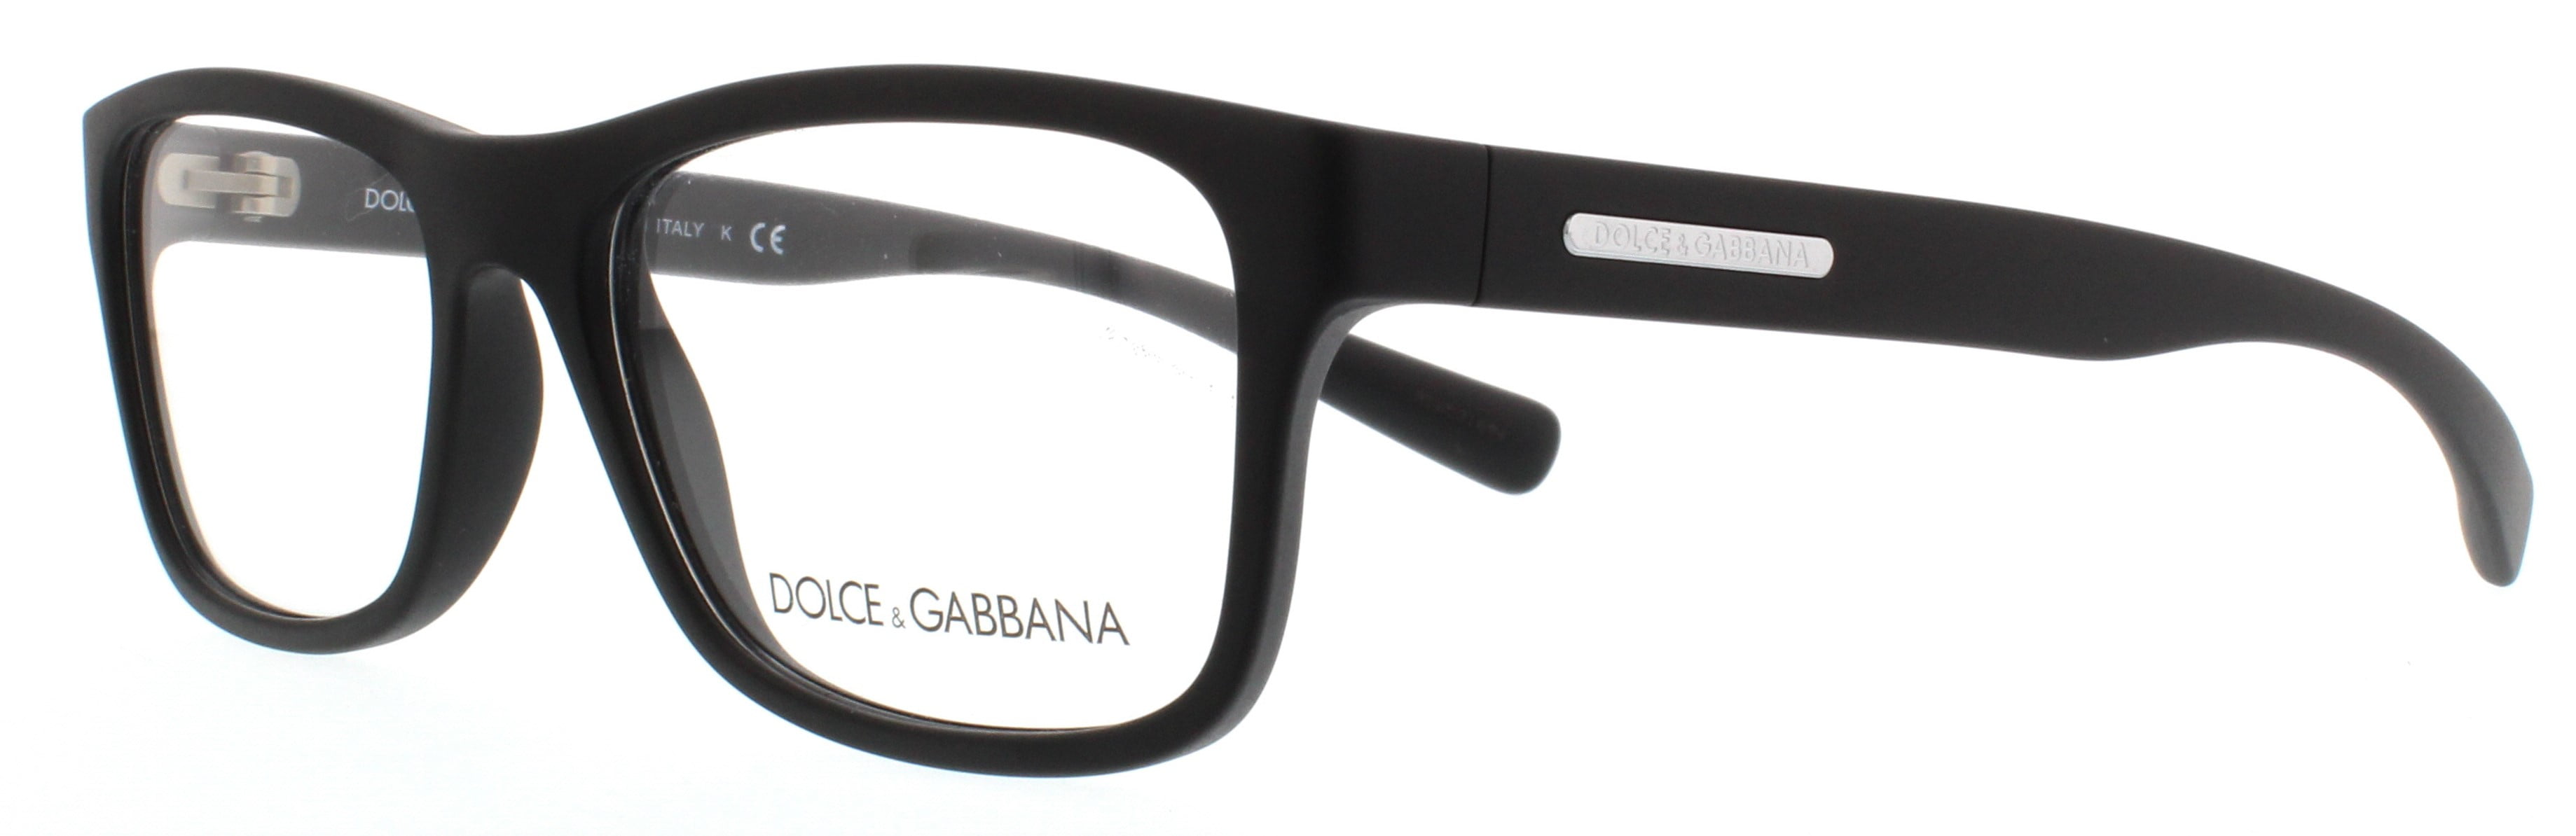 dolce and gabbana matte black glasses